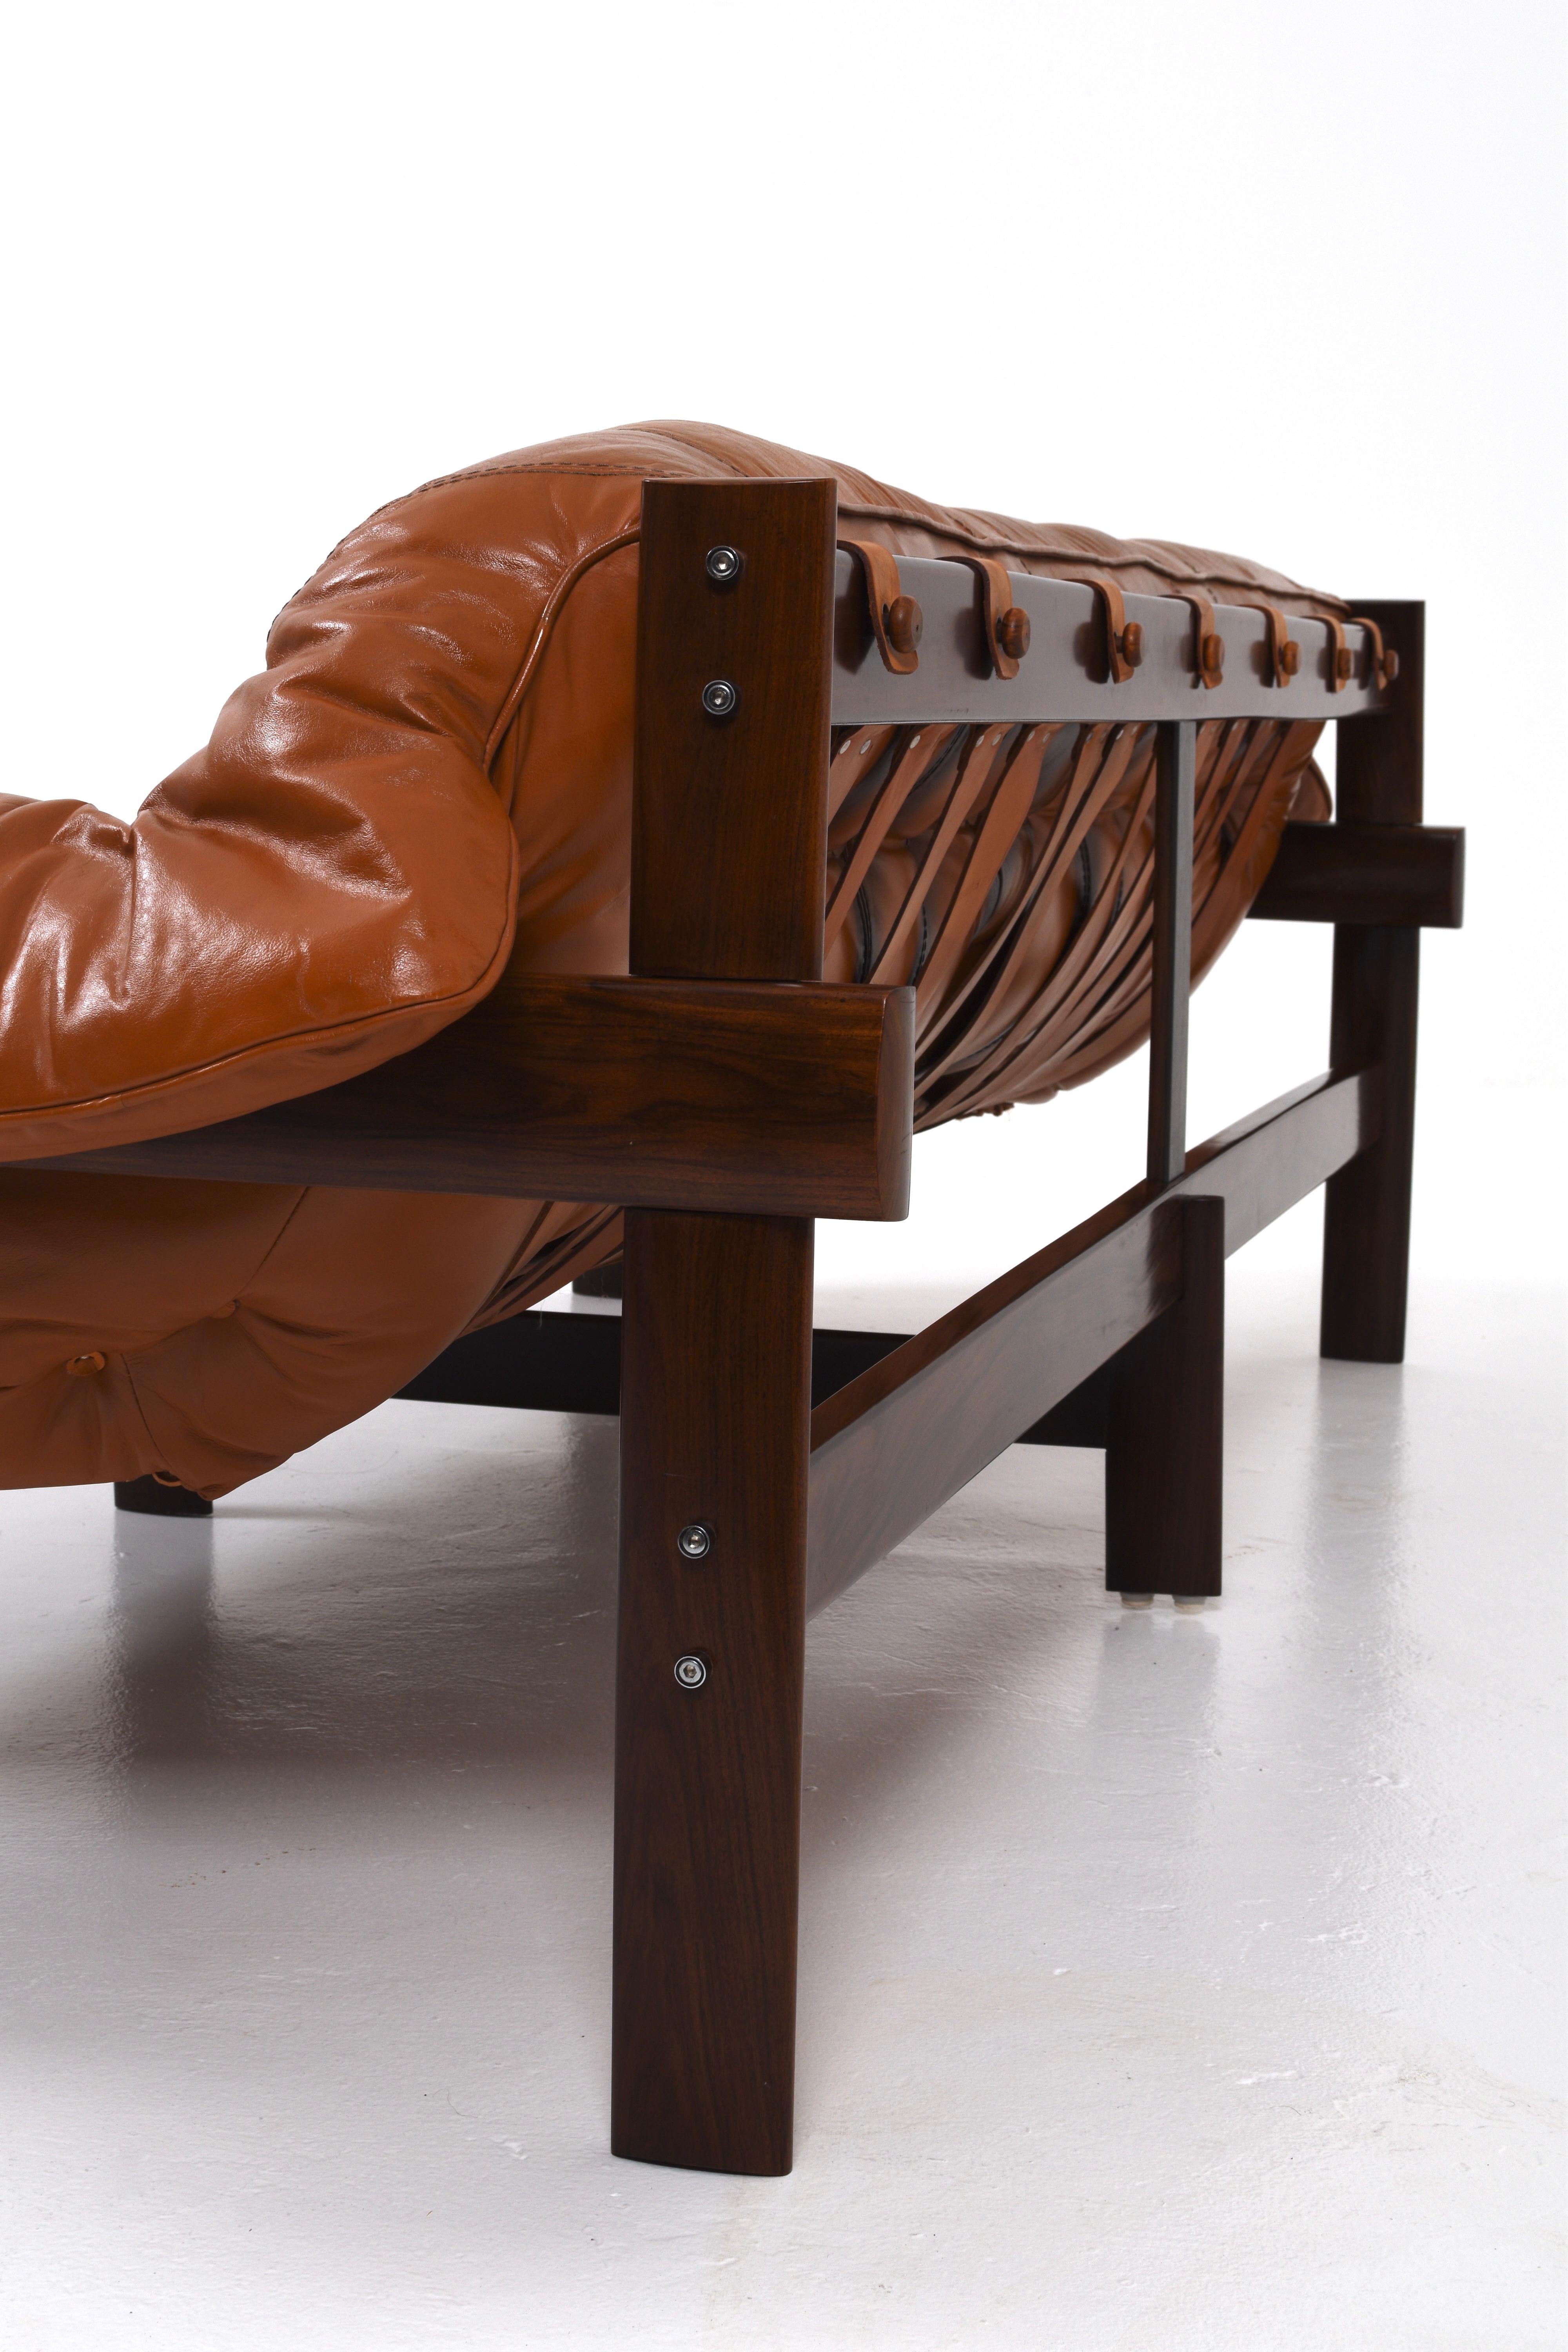 Percival Lafer MP-41 sofa in cognac leather, Brazil 1970s 5